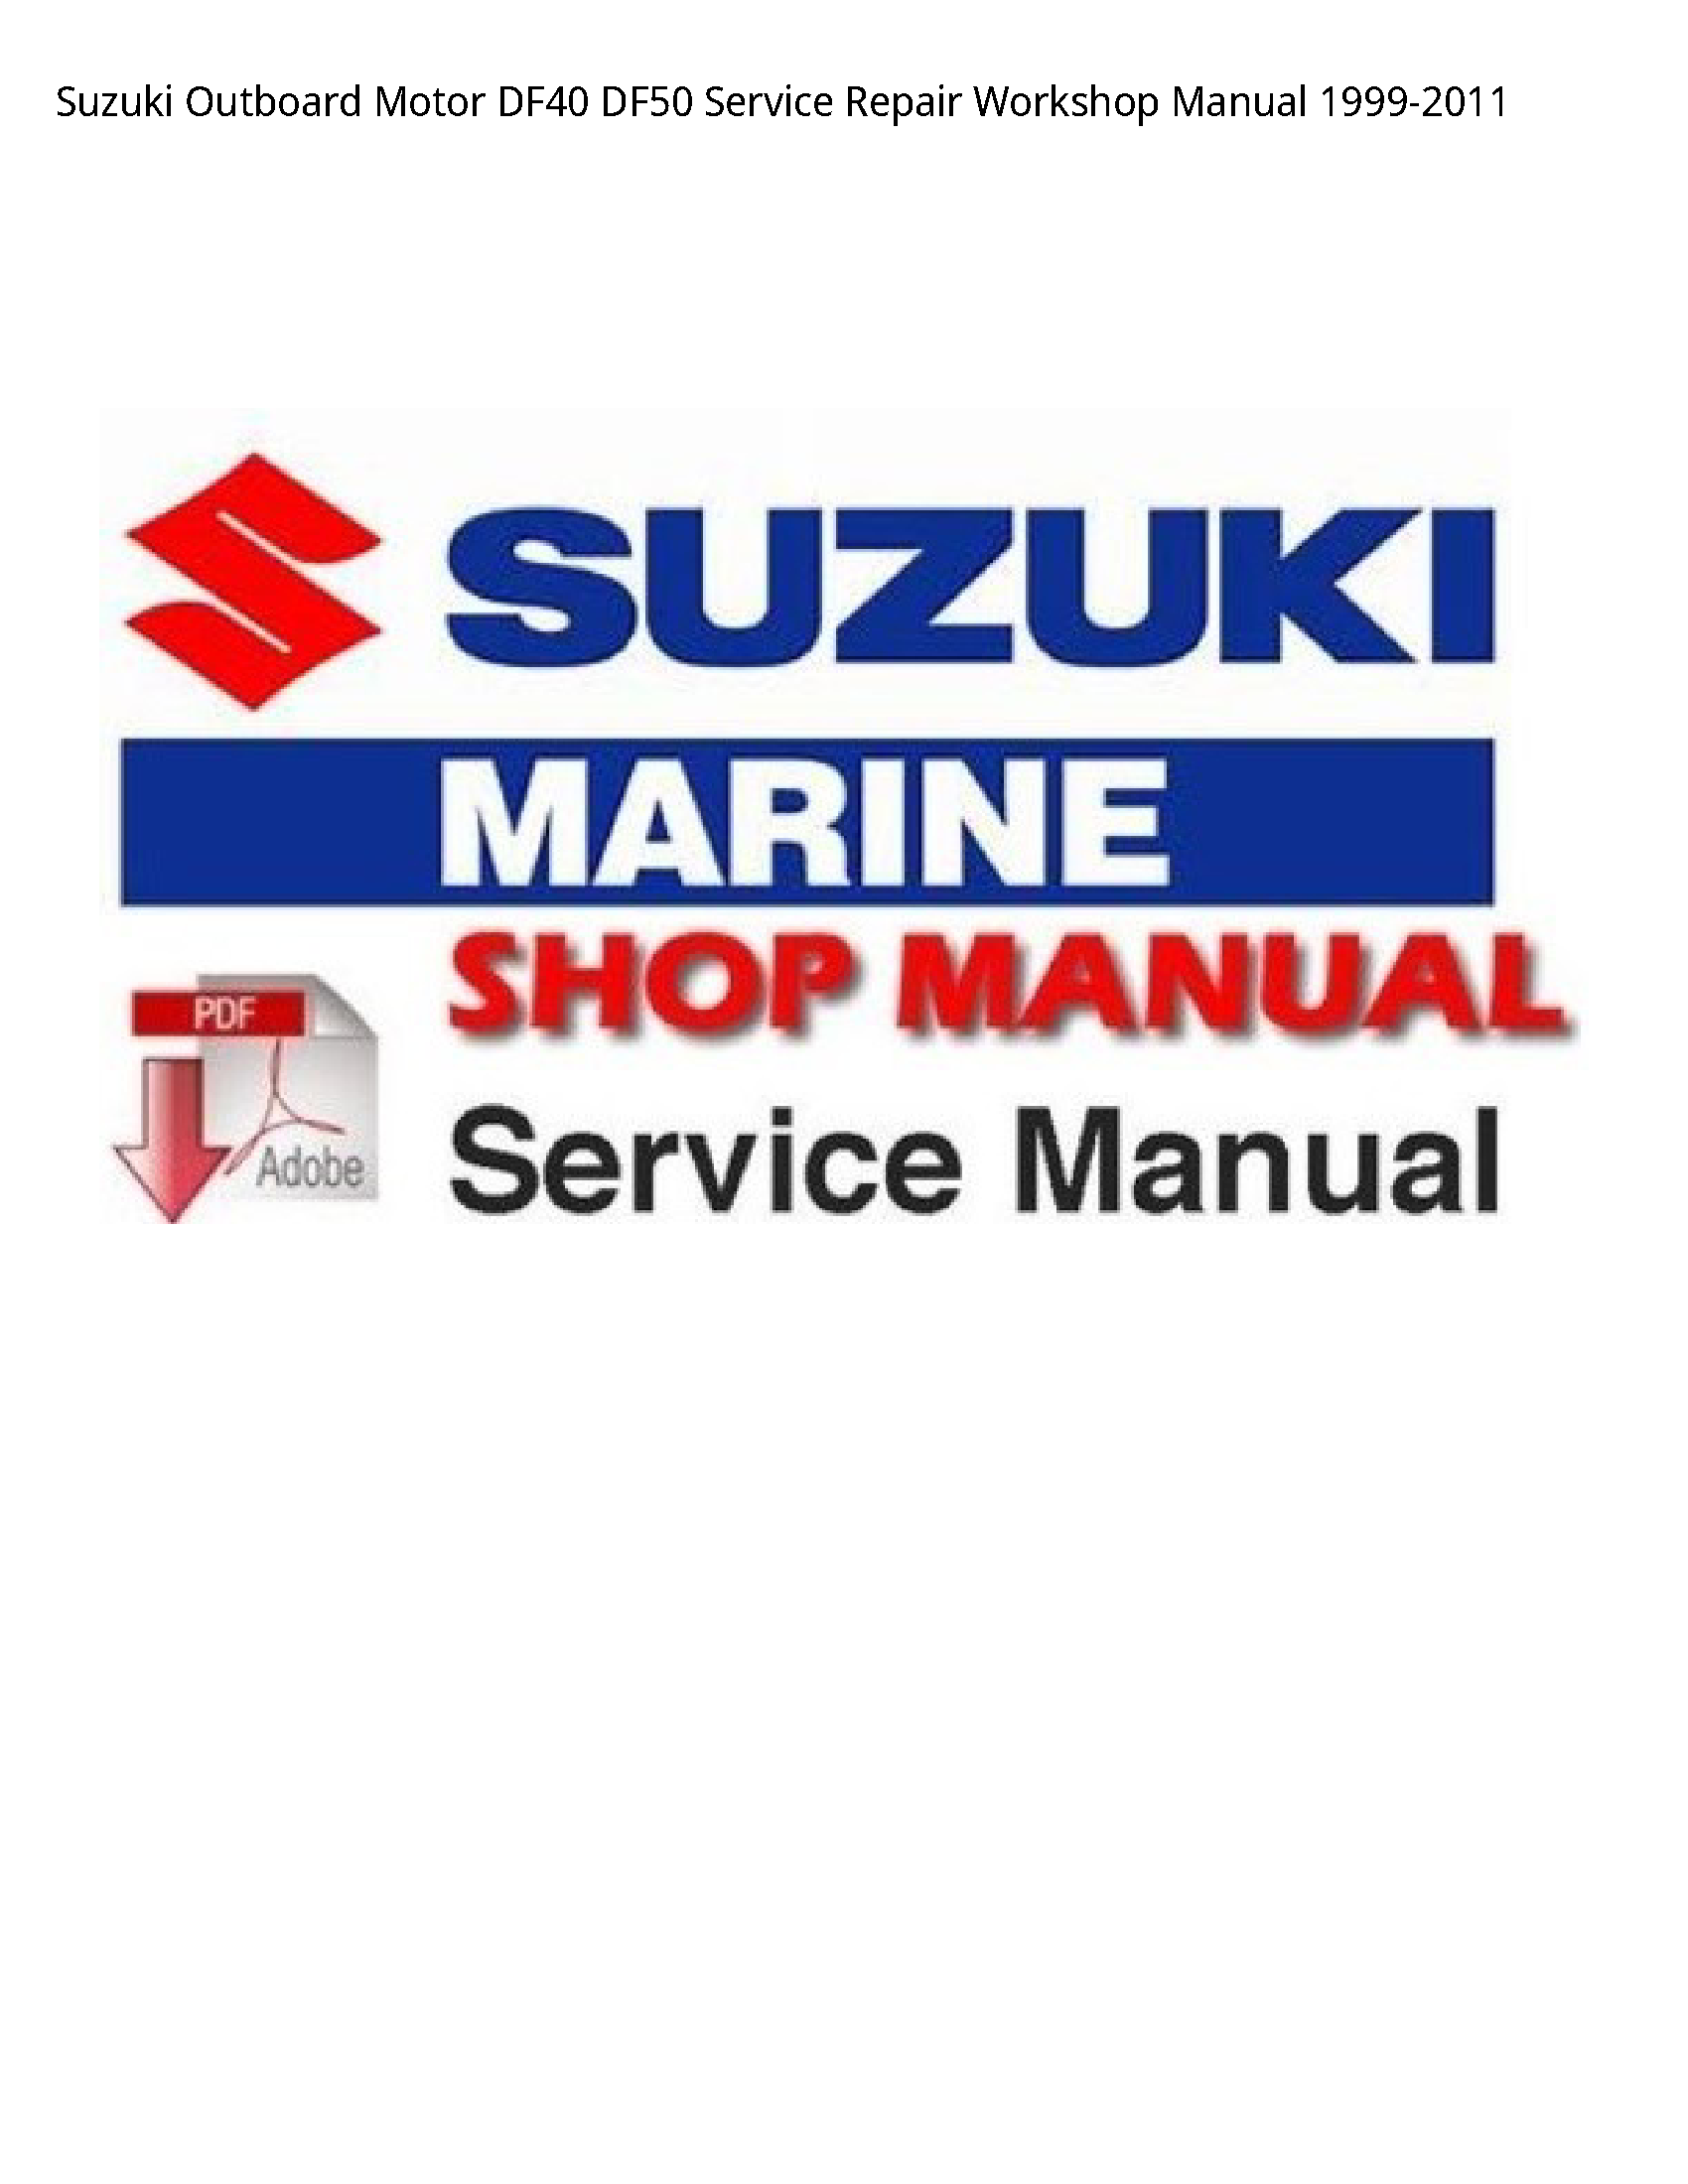 Suzuki DF40 Outboard Motor manual